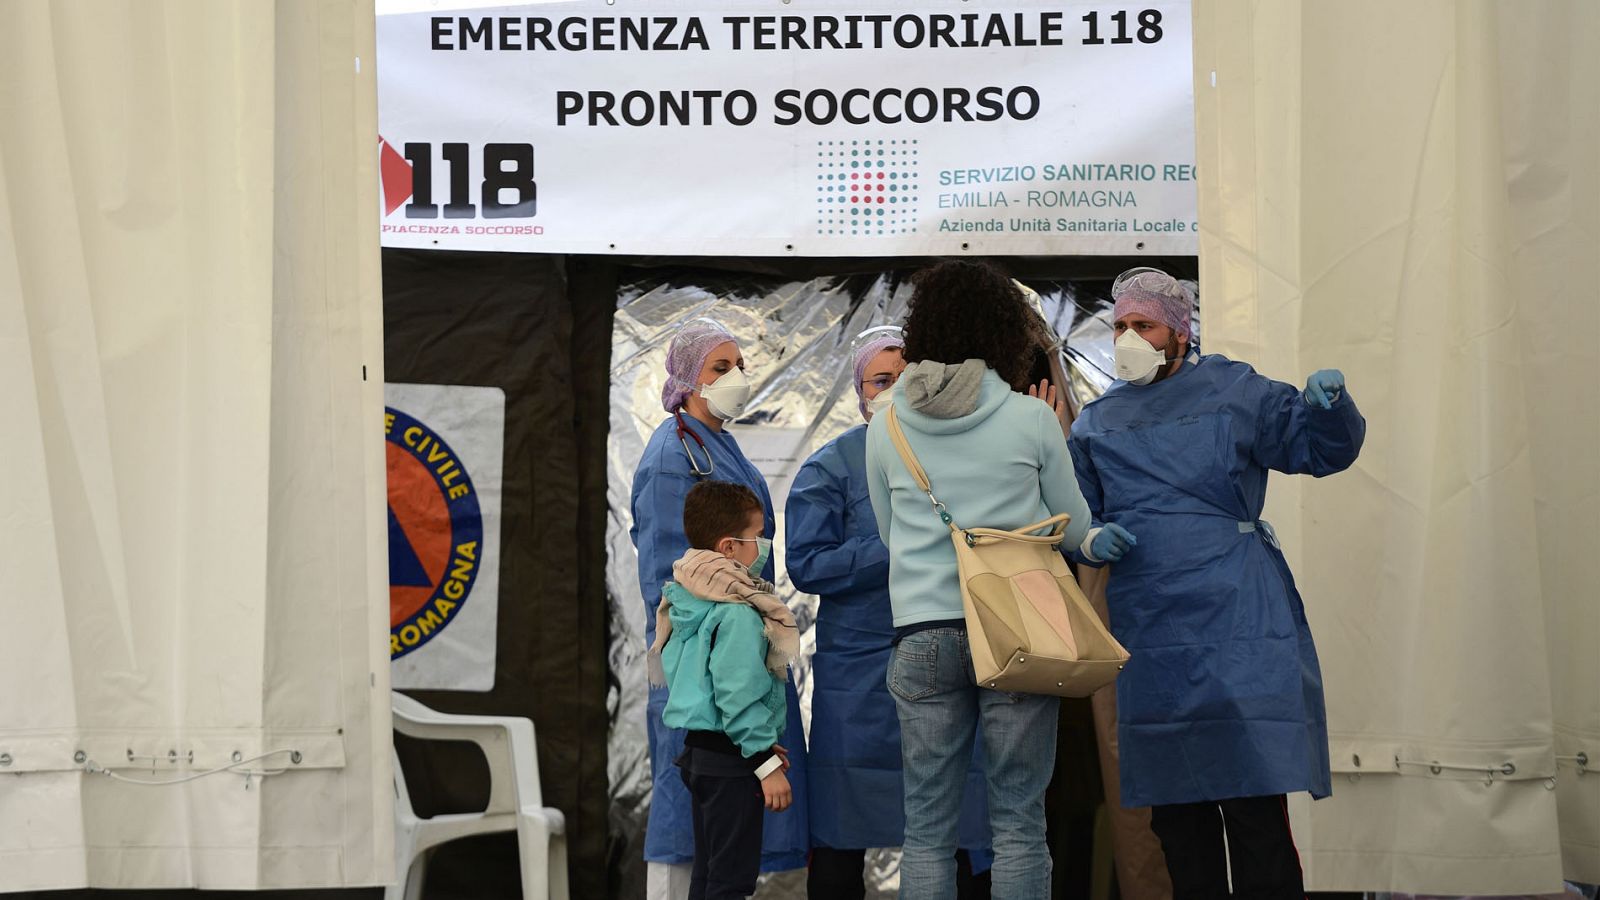 Italia coronavirus | La incertidumbre y el miedo al coronavirus agitan la economía italiana - RTVE.es